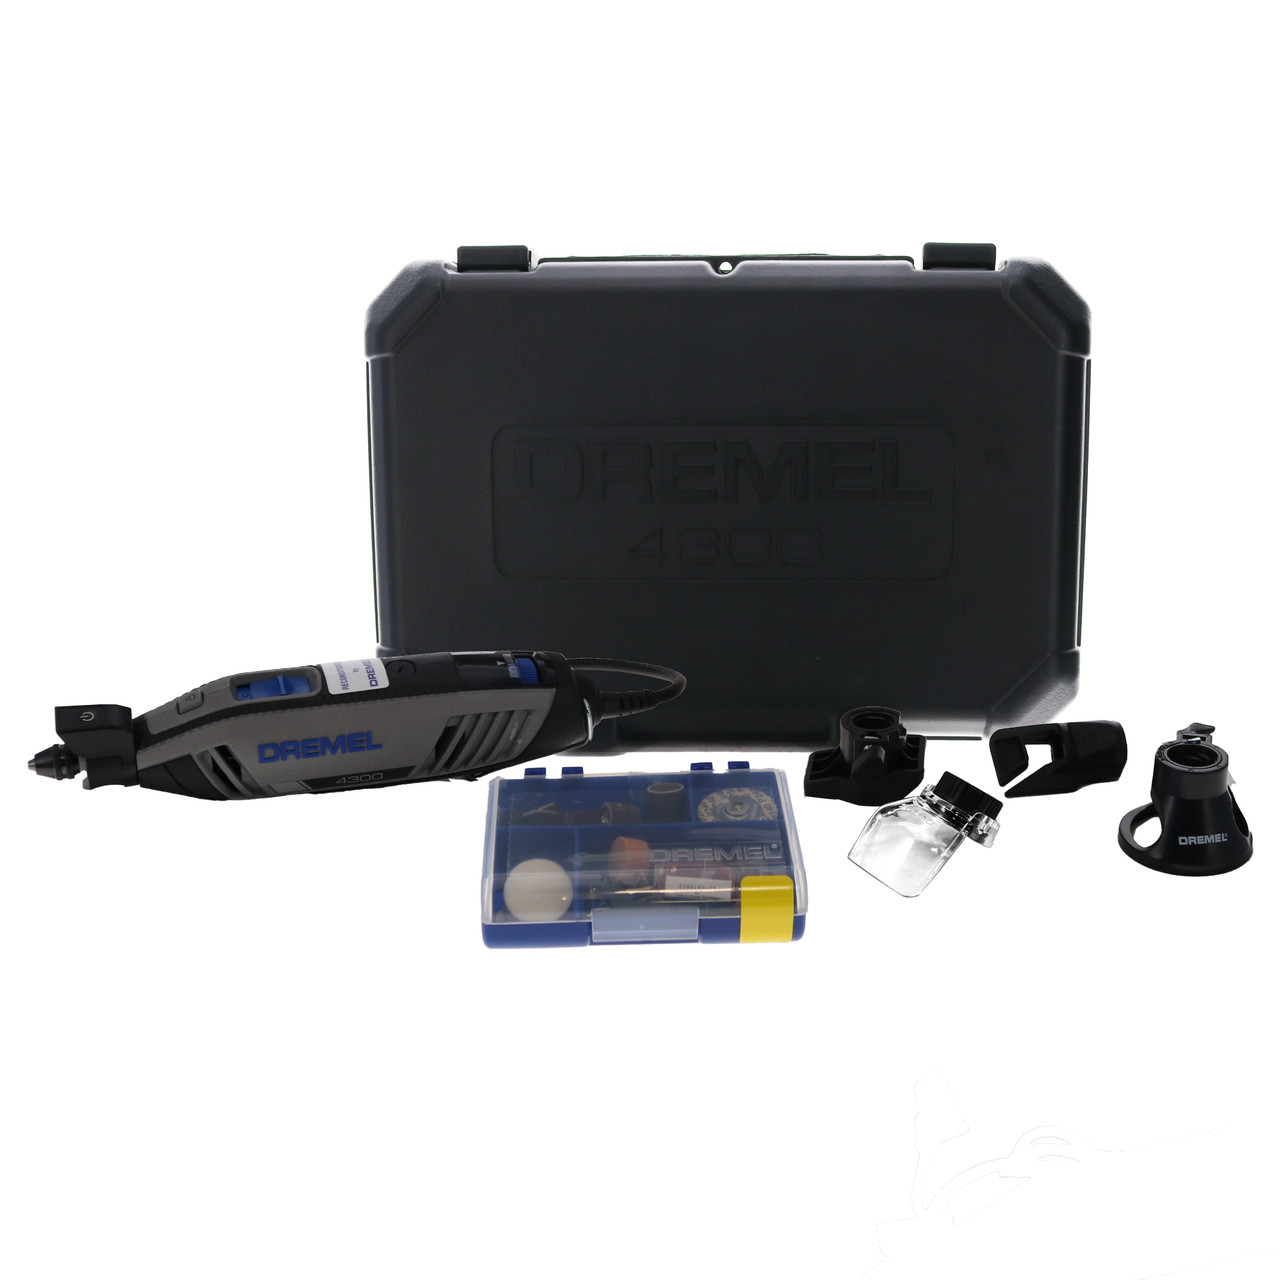 Dremel 120 Volt Electric Rotary Tool Kit - 35,000 RPM, 1.15 Amps | Part #100-N/7